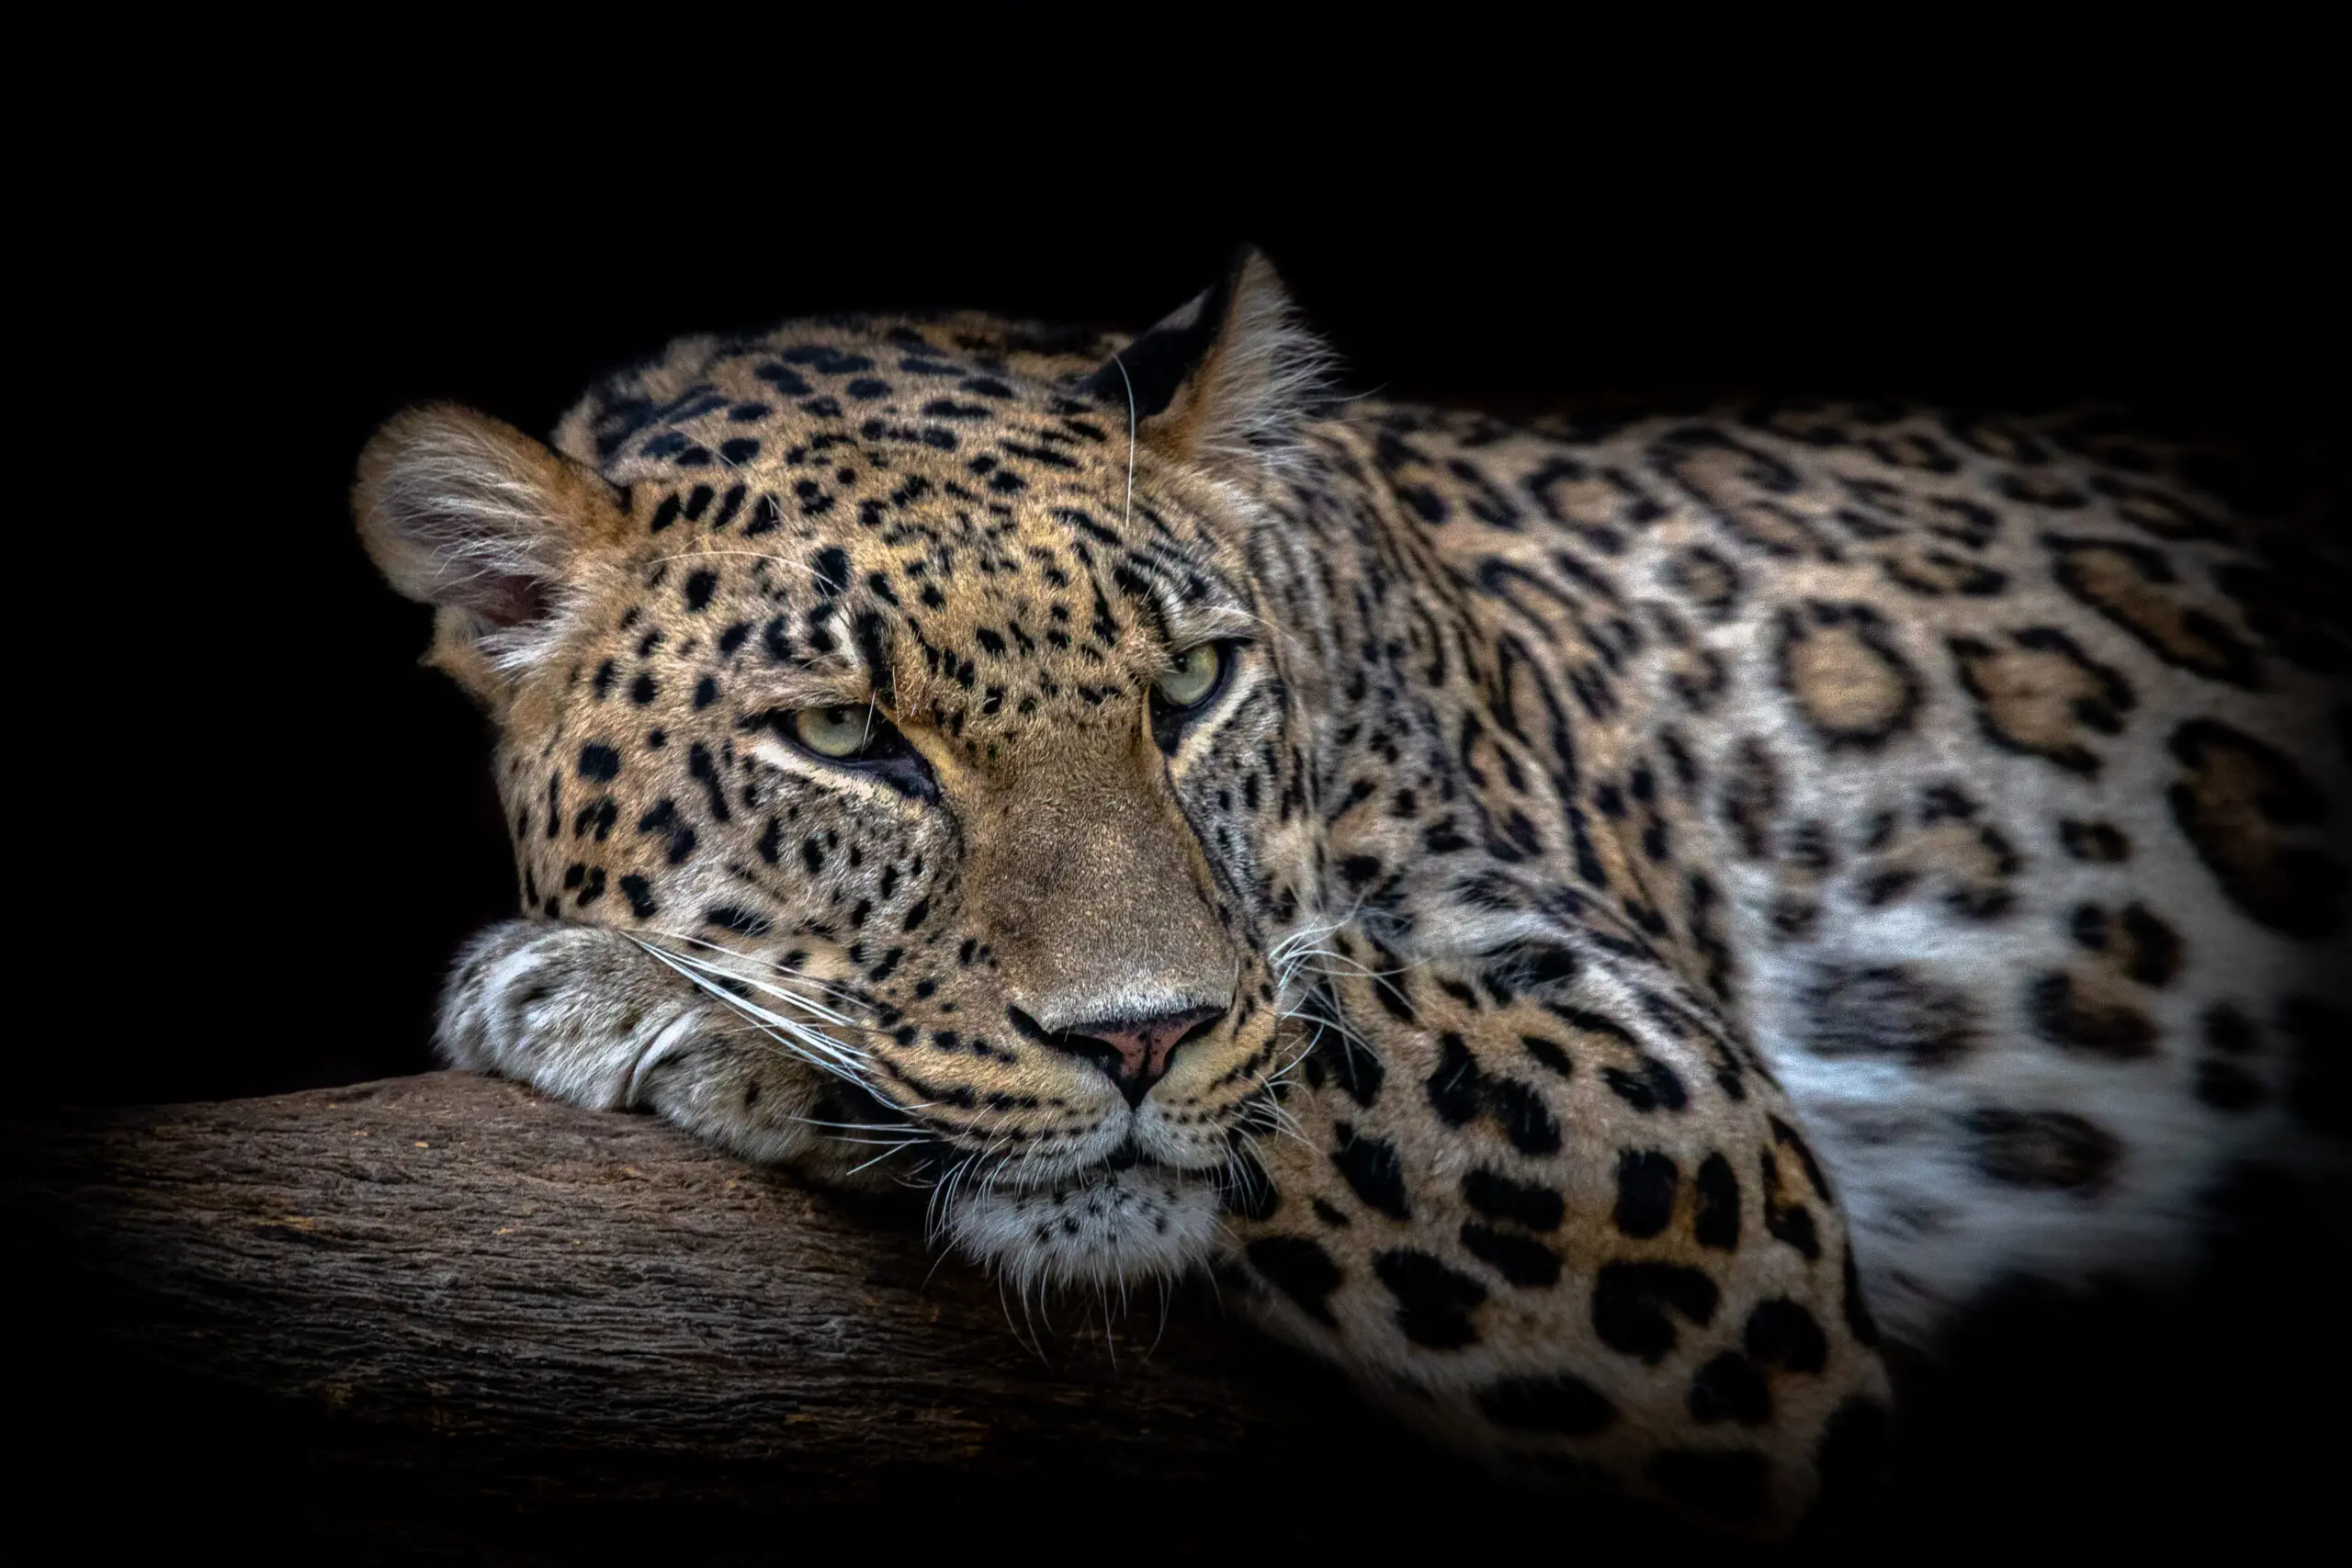 Wandbild (19371) Leopard resting by Nauzet Baez Photography präsentiert: Tiere